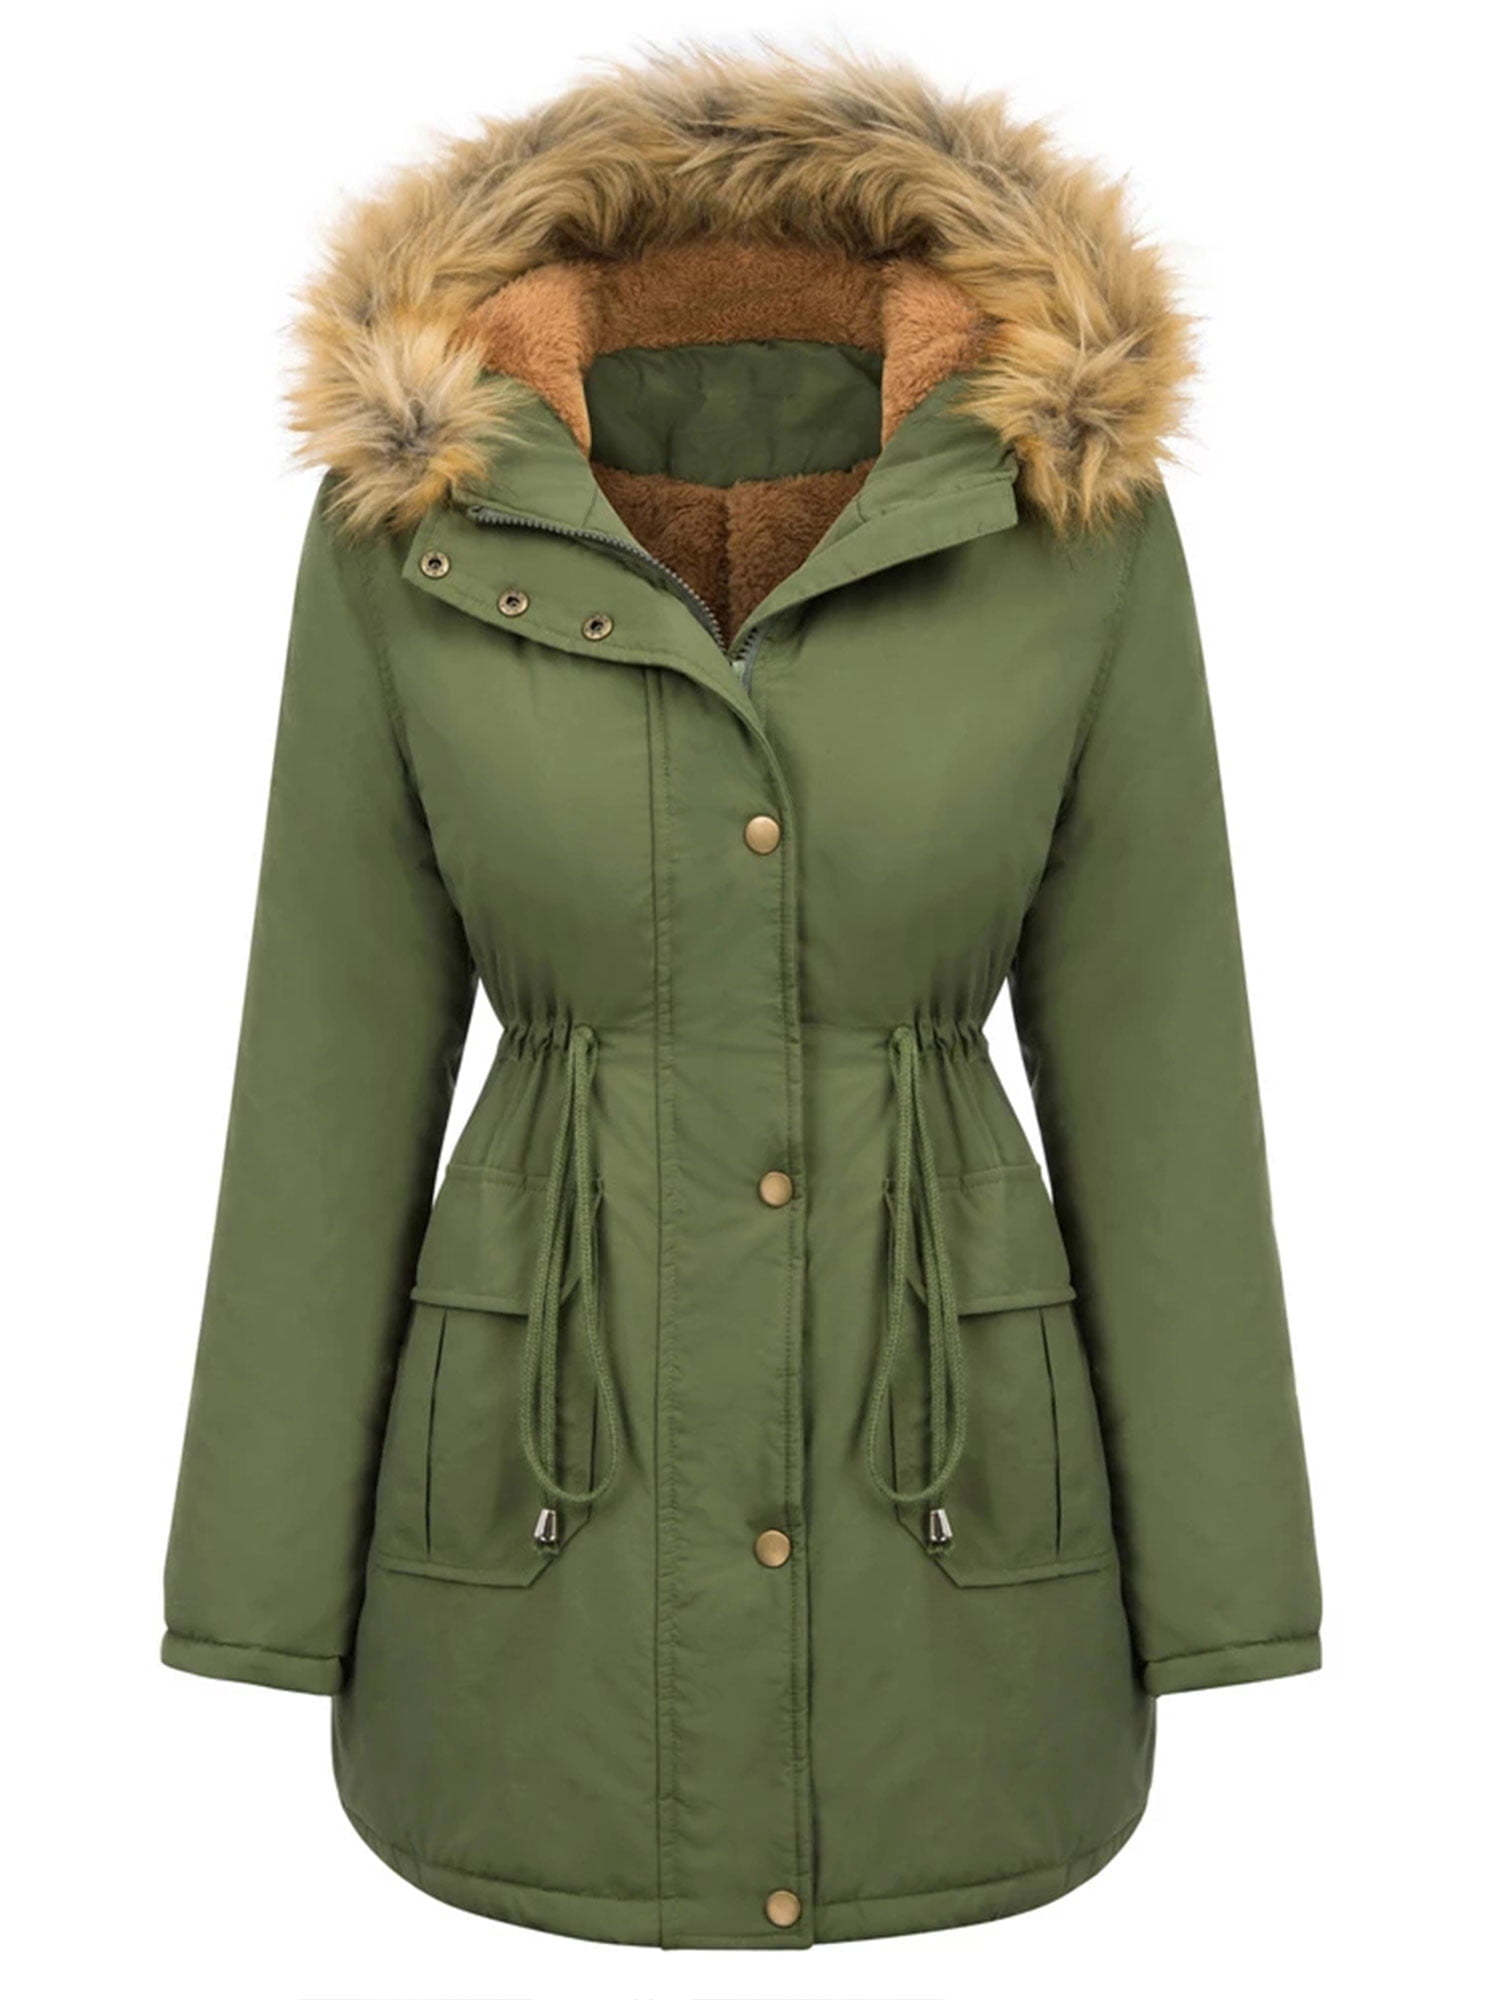 Yck-SAiu Womens Padded Coat Thicken Winter Warm Fleece Lined Long Jacket Comfy Slim Overcoats with Fur Trimmed Hood 